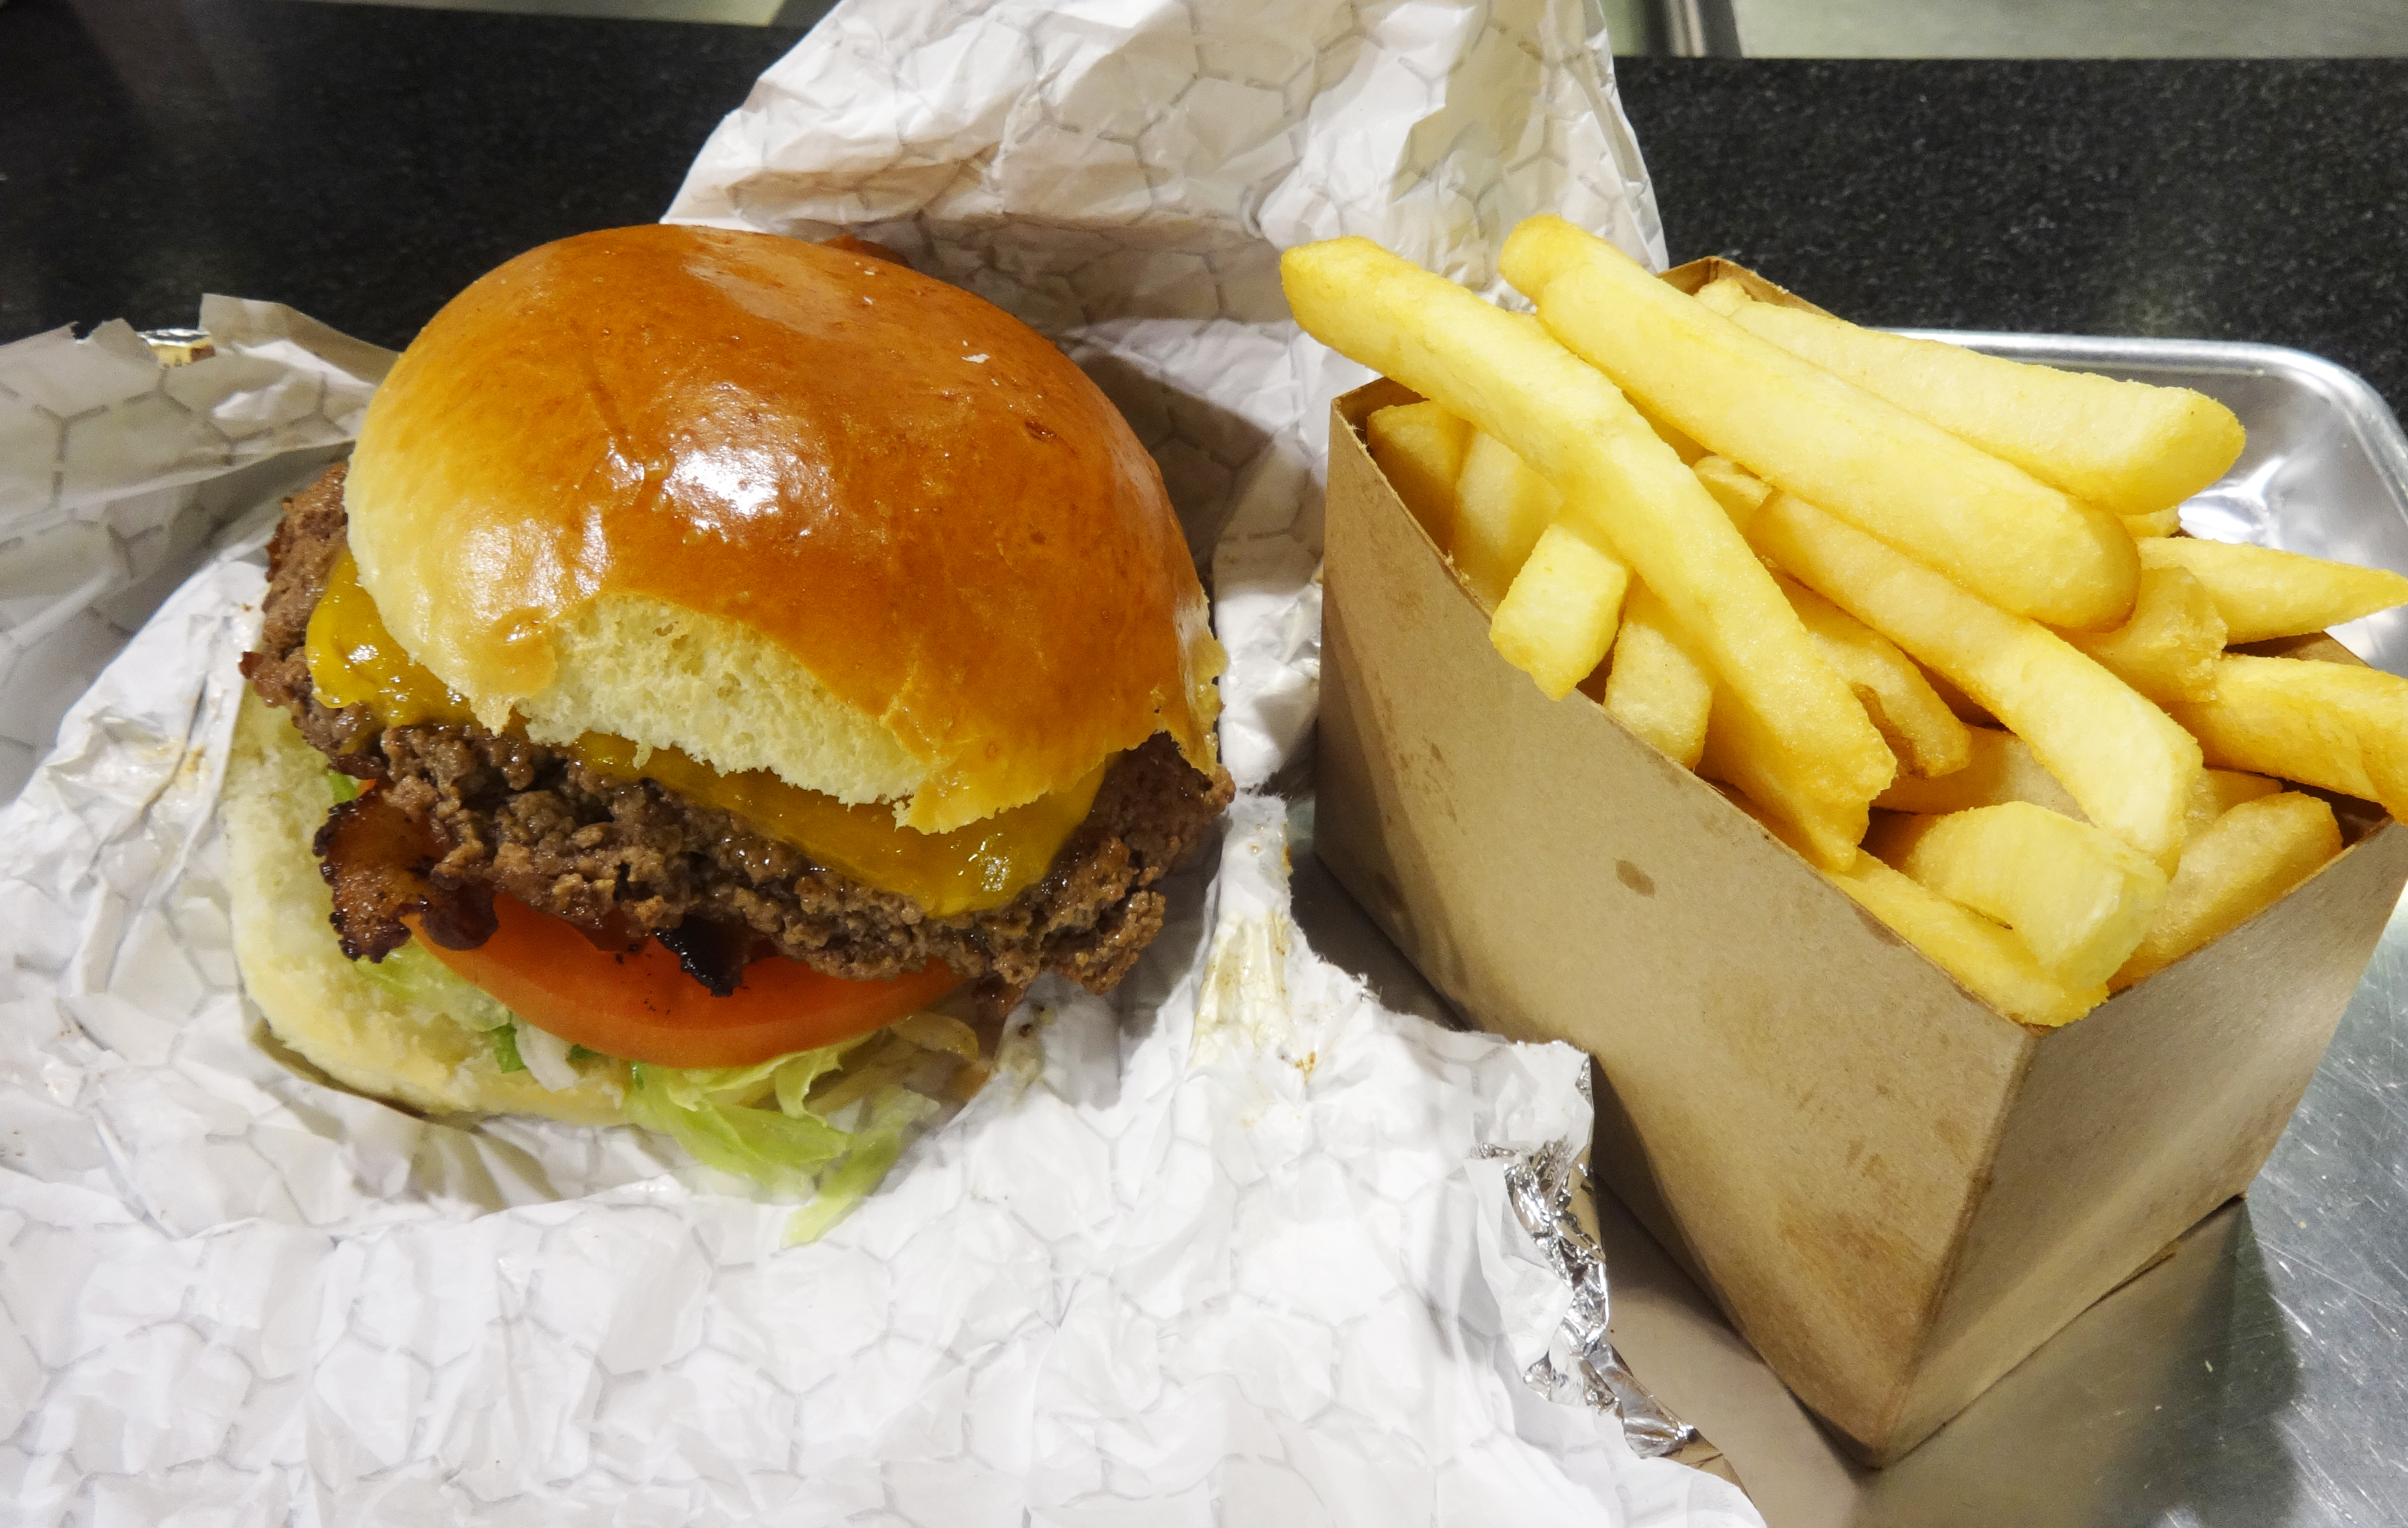 Whole Foods hamburger and fries